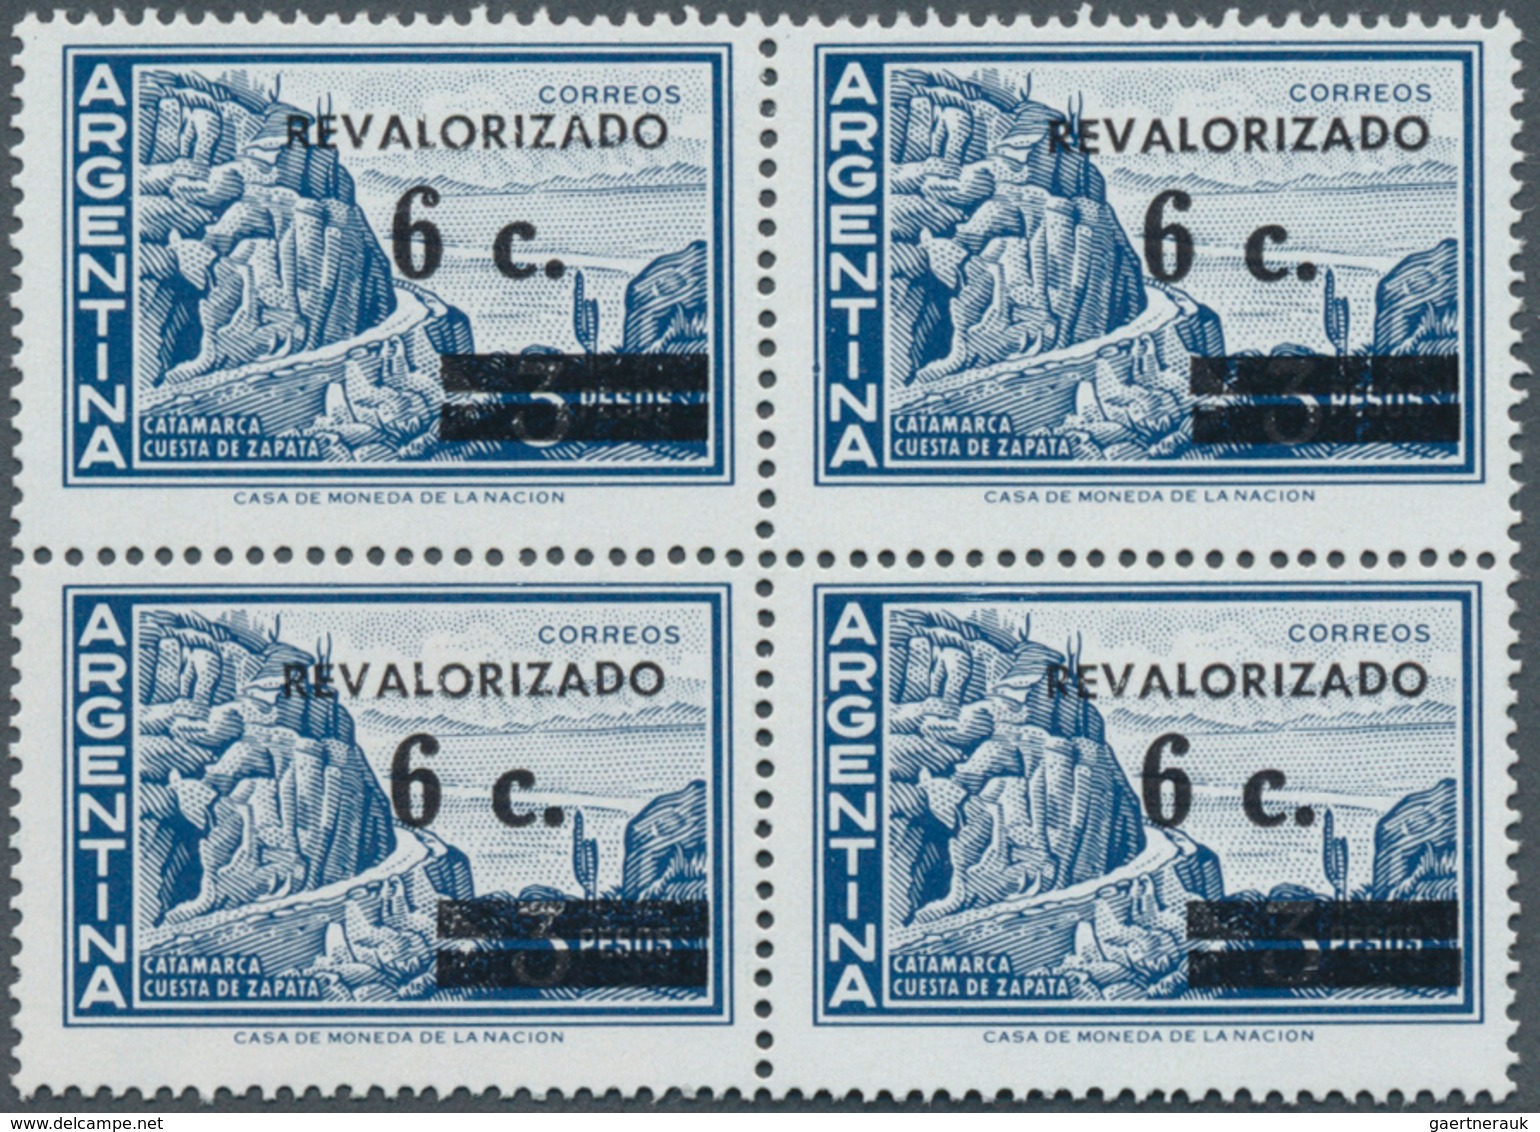 Südamerika: 1933/1975. South America Lot with ECUADOR Sc #319/2,100copies; PARAGUAY Sc #C261/975 cop